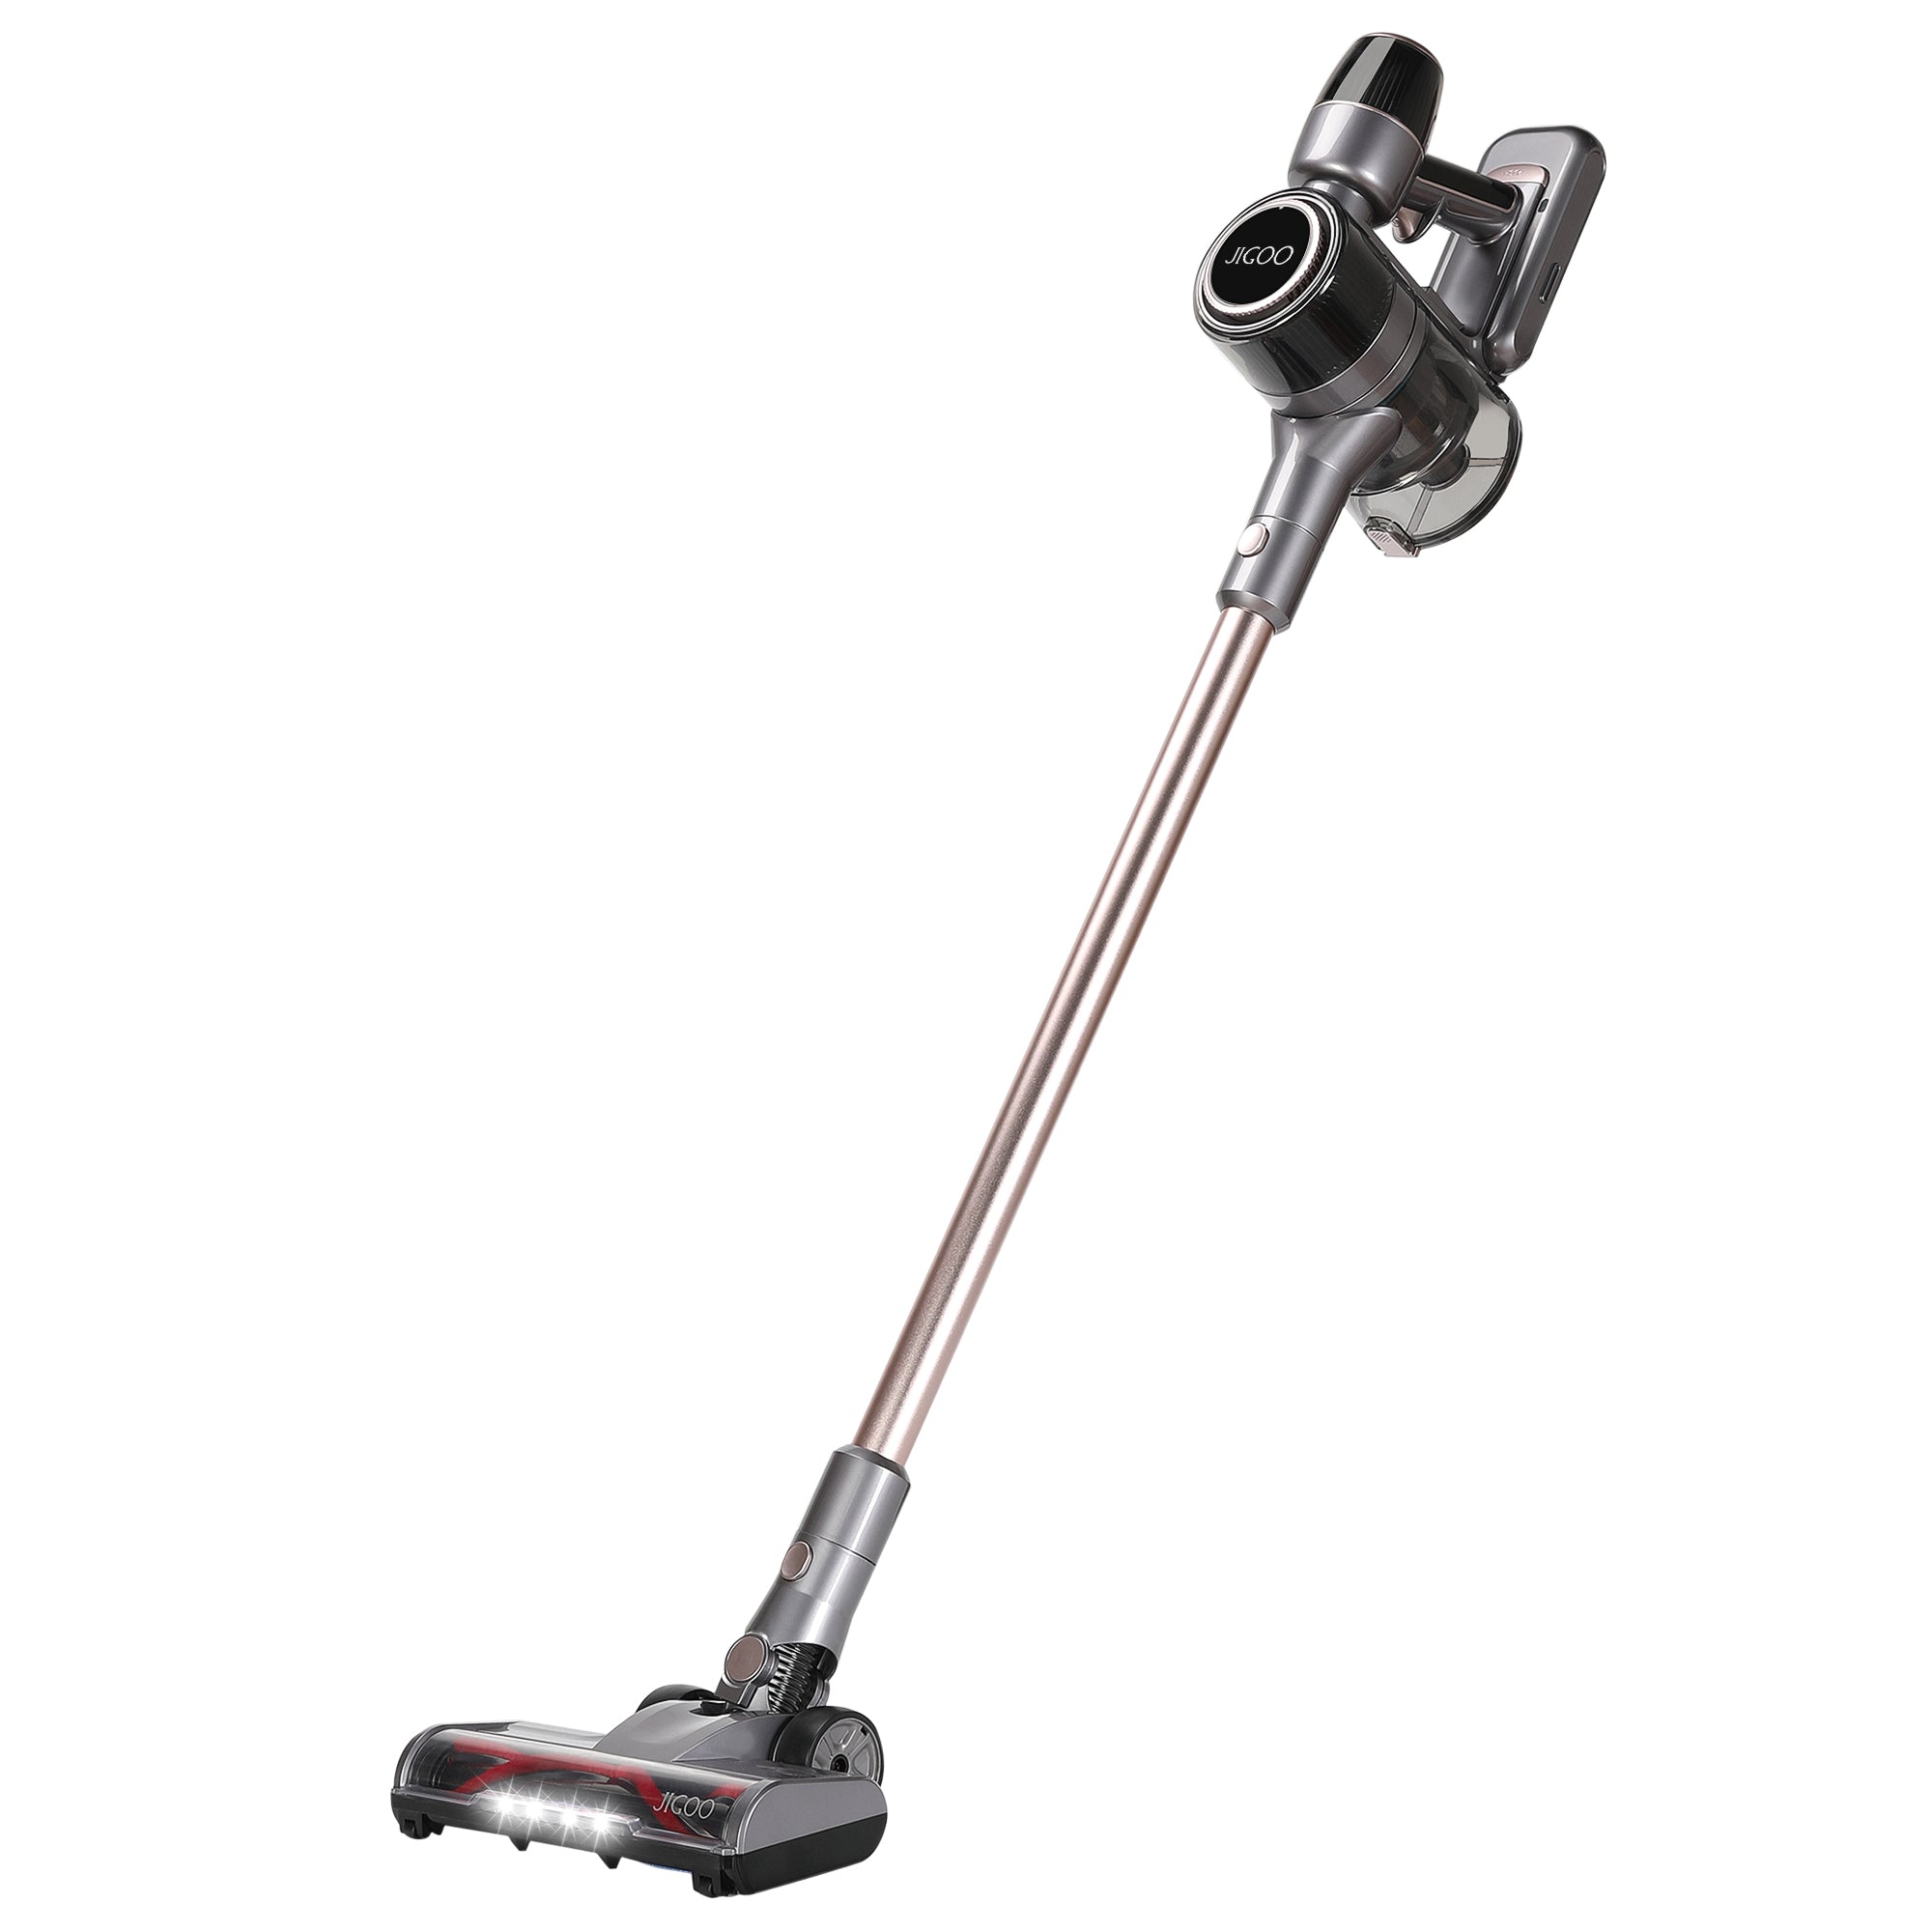 Jigoo C300 Cordless Vacuum Cleaner